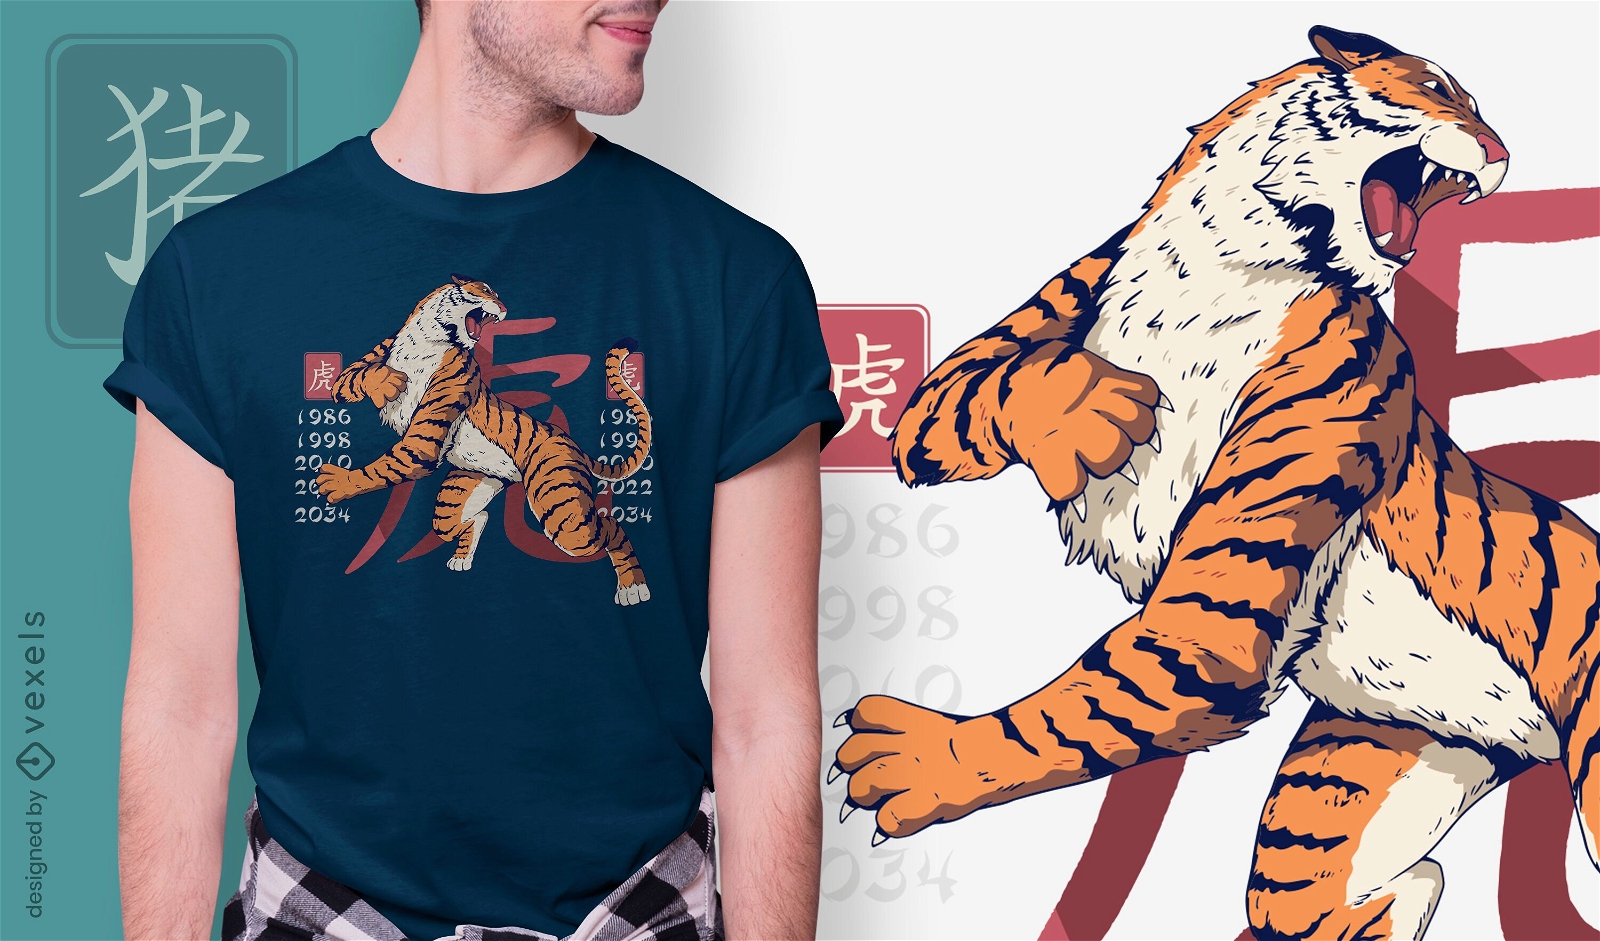 Tiger T-Shirt Designs - Designs For Custom Tiger T-Shirts - Free